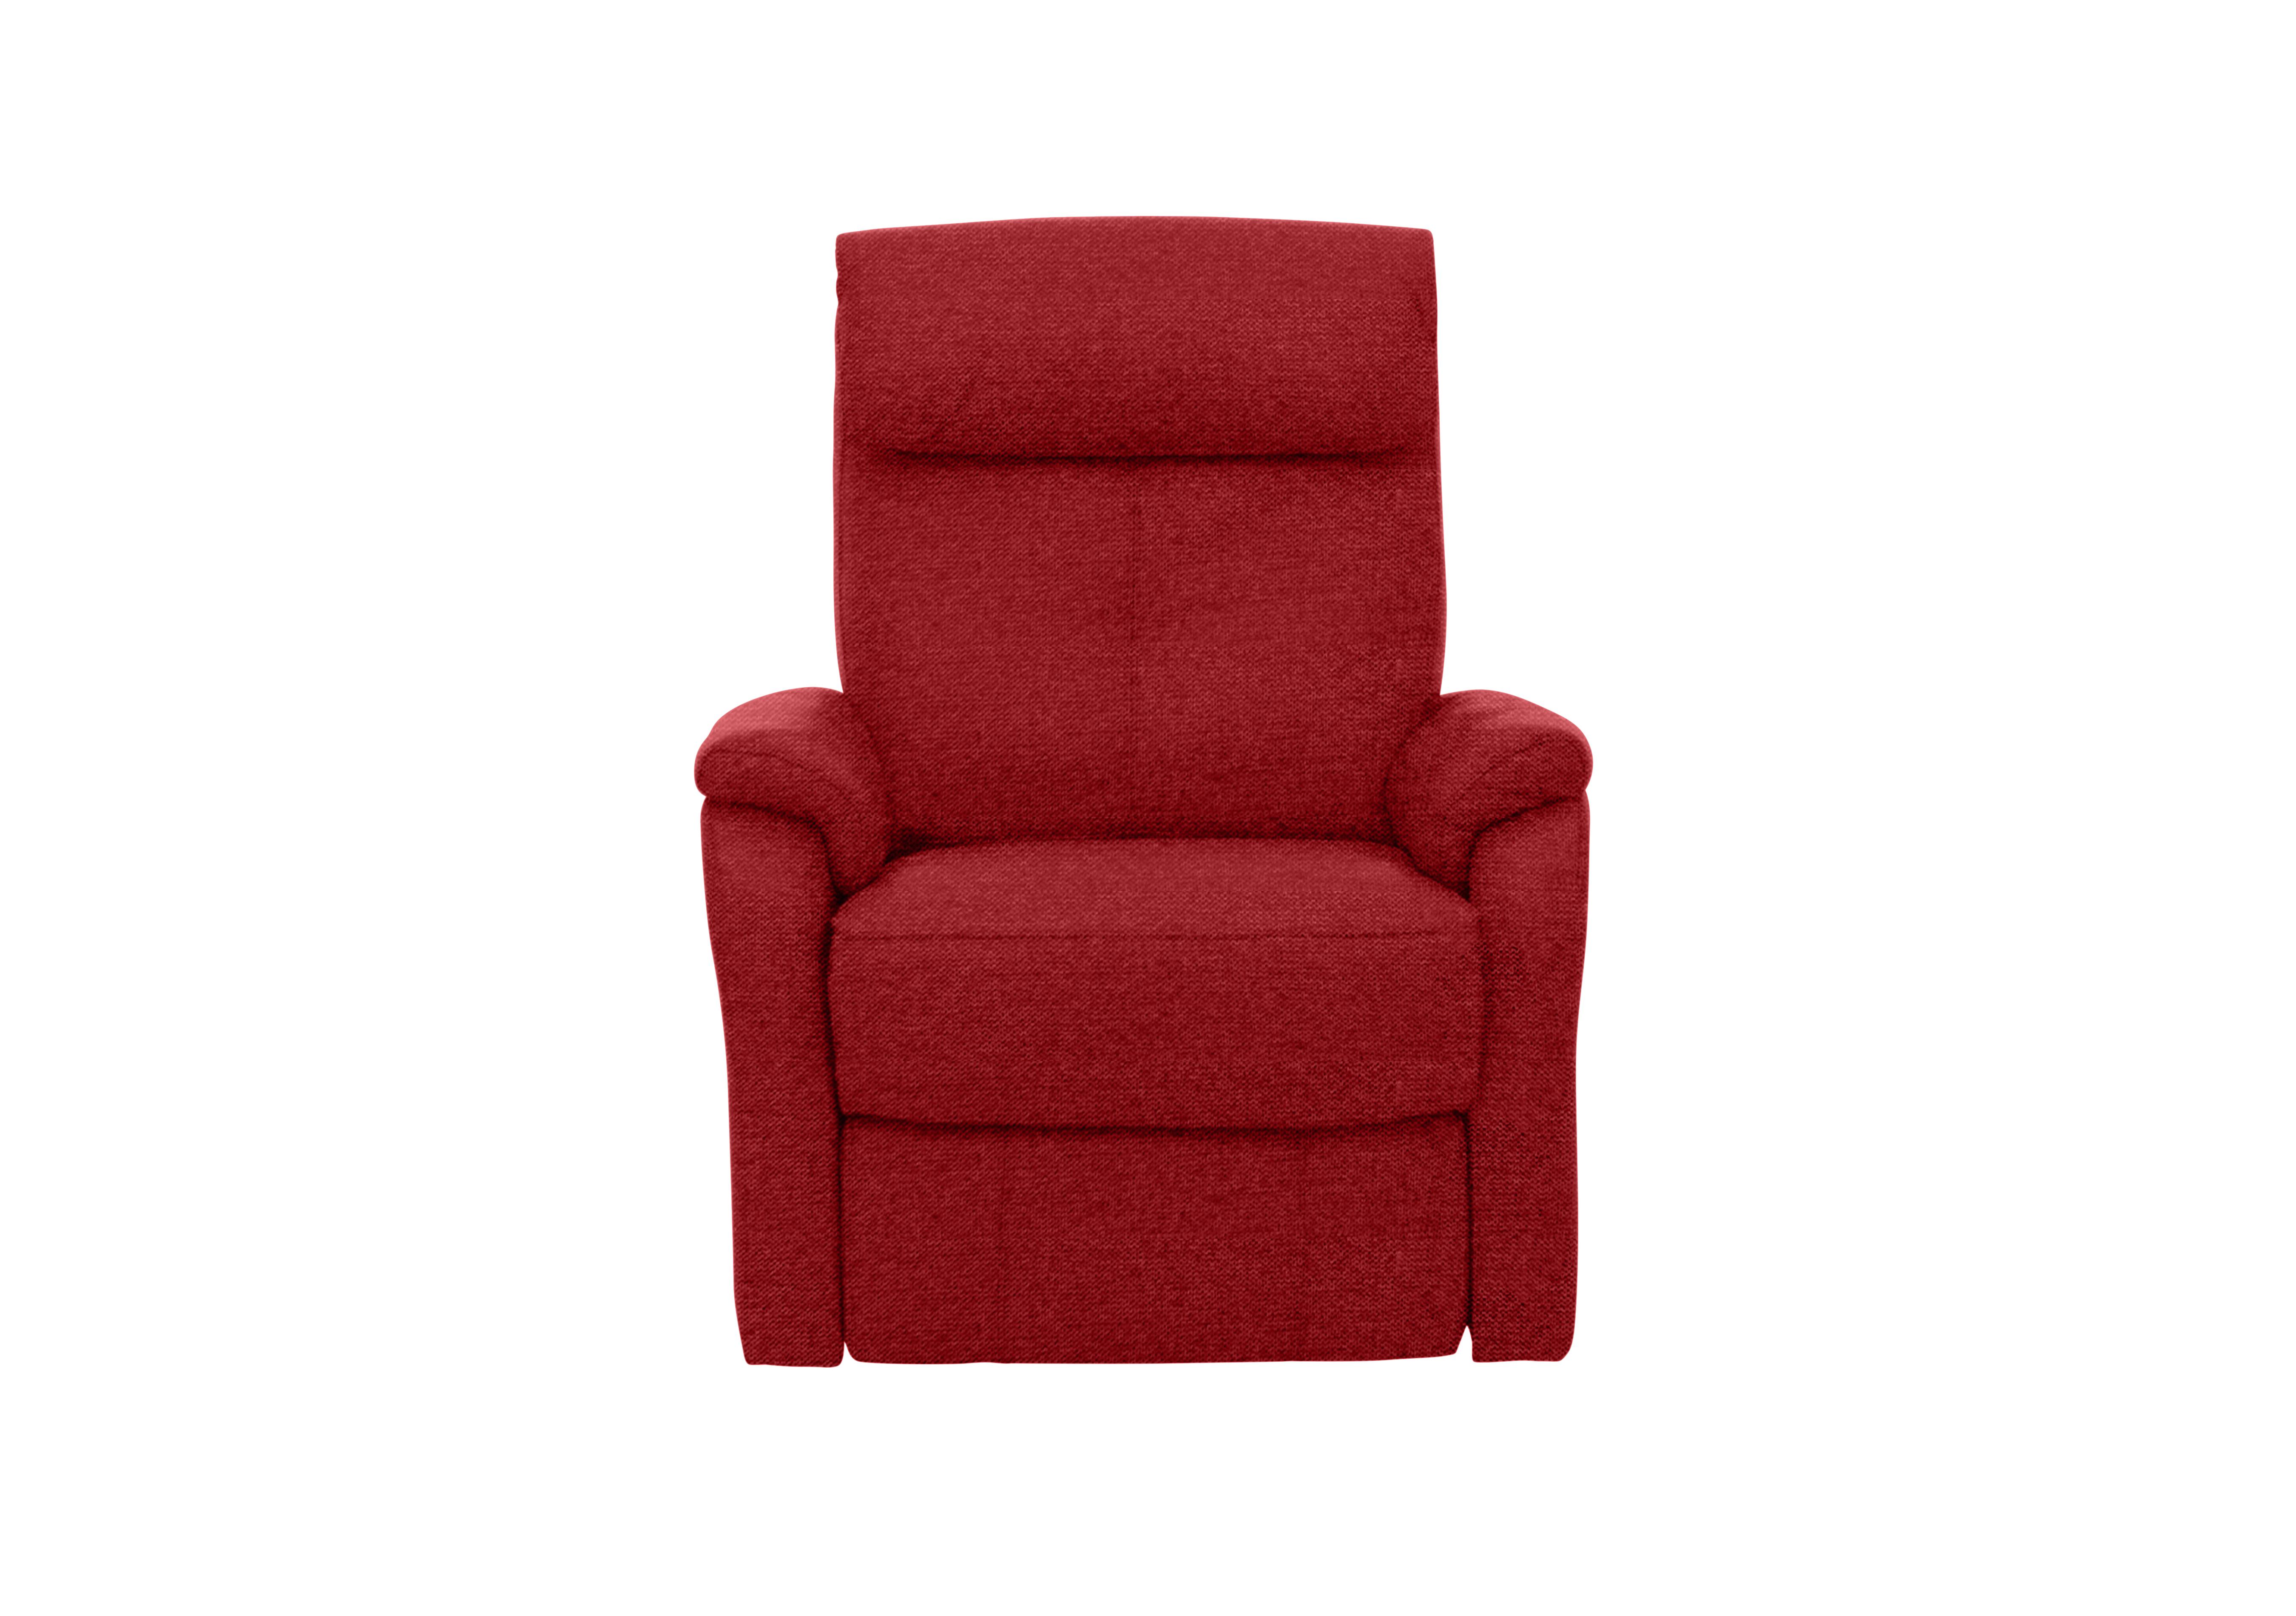 Rowan Fabric Swivel Rocker Recliner Armchair in Fab-Blt-R29 Red on Furniture Village